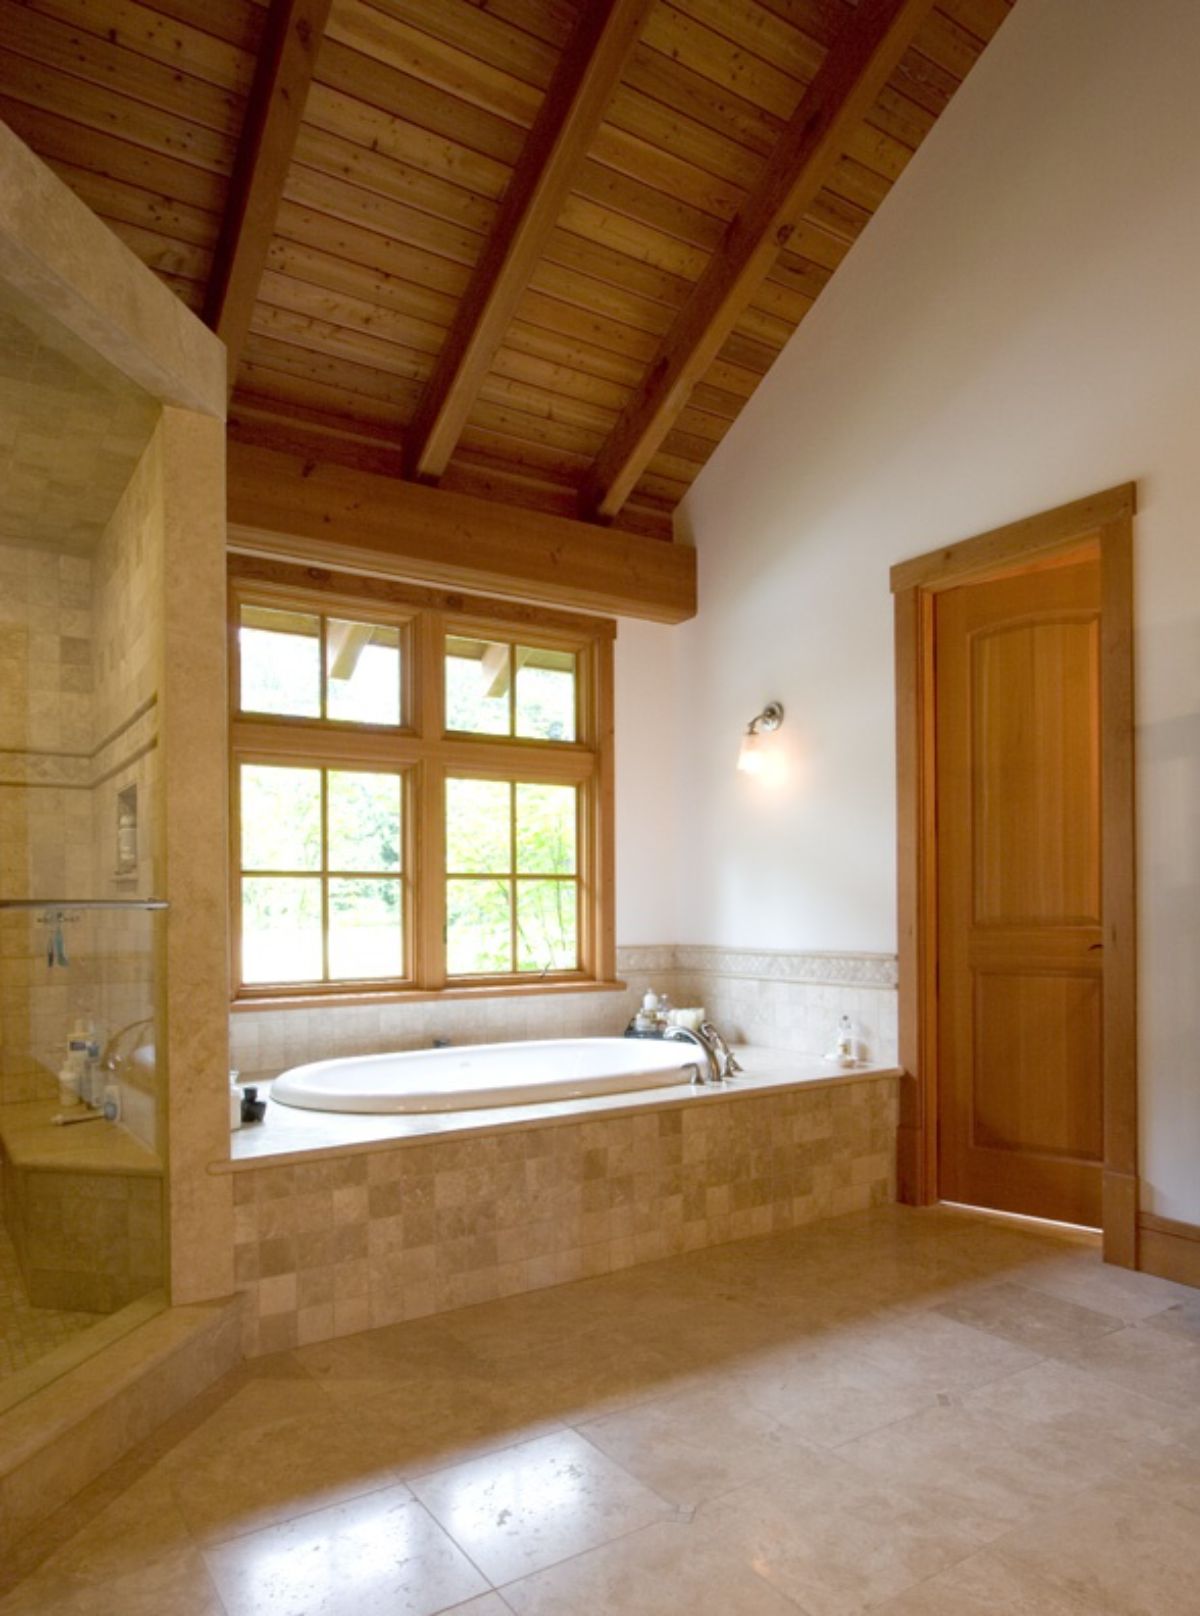 cream tile around white soaking tub with cream tiled shower on left